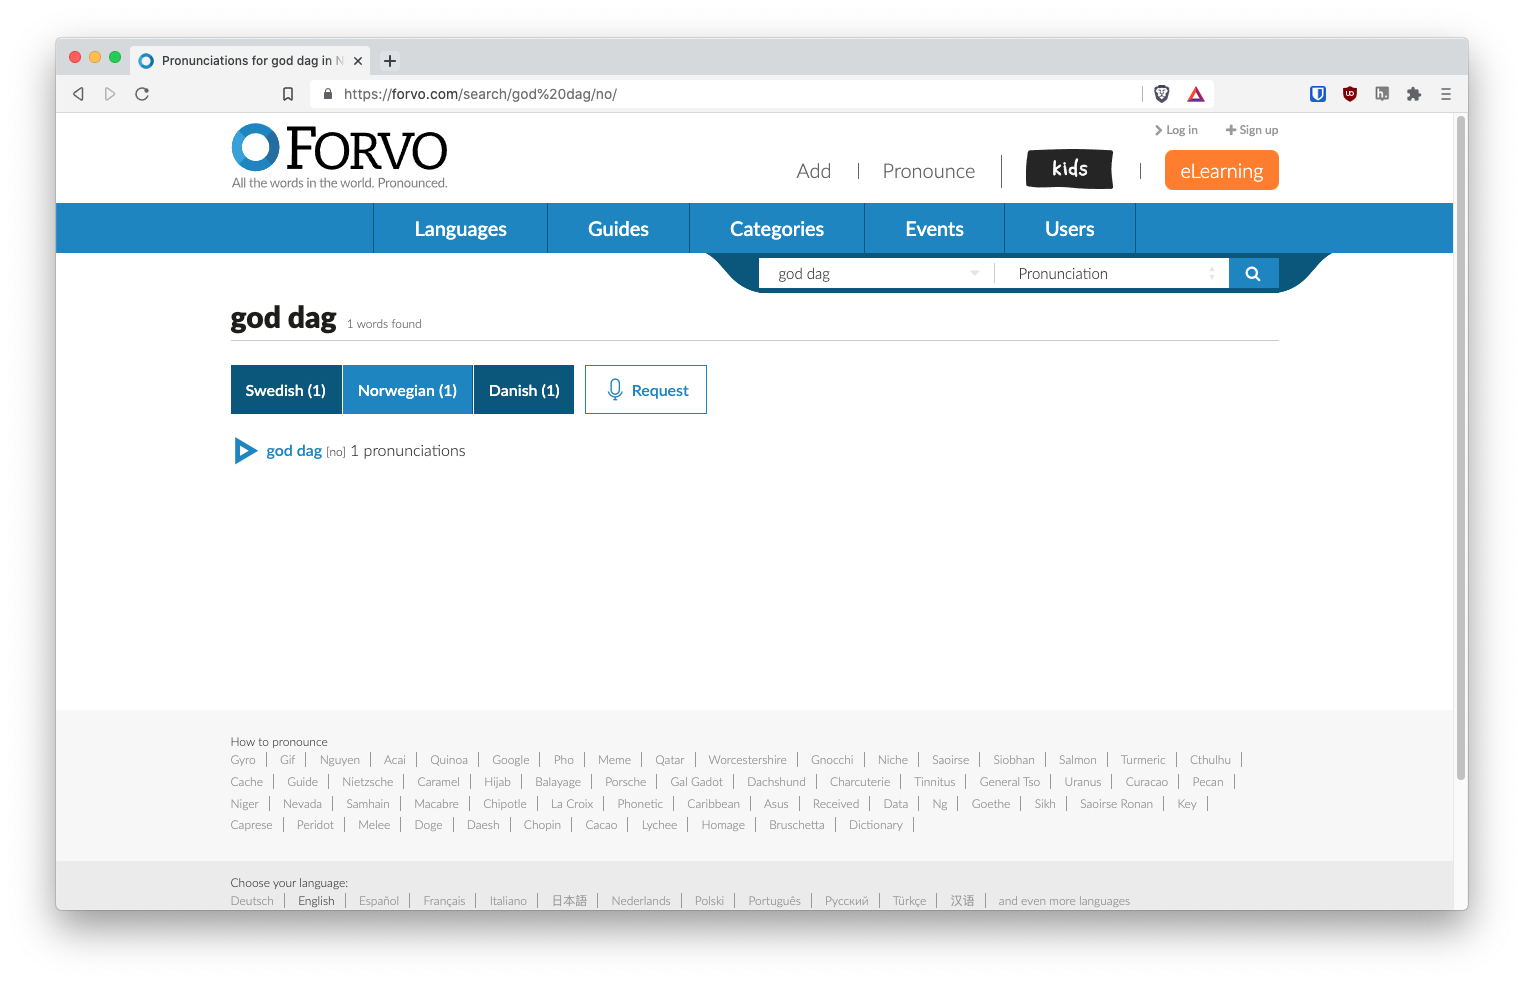 Forvo search results